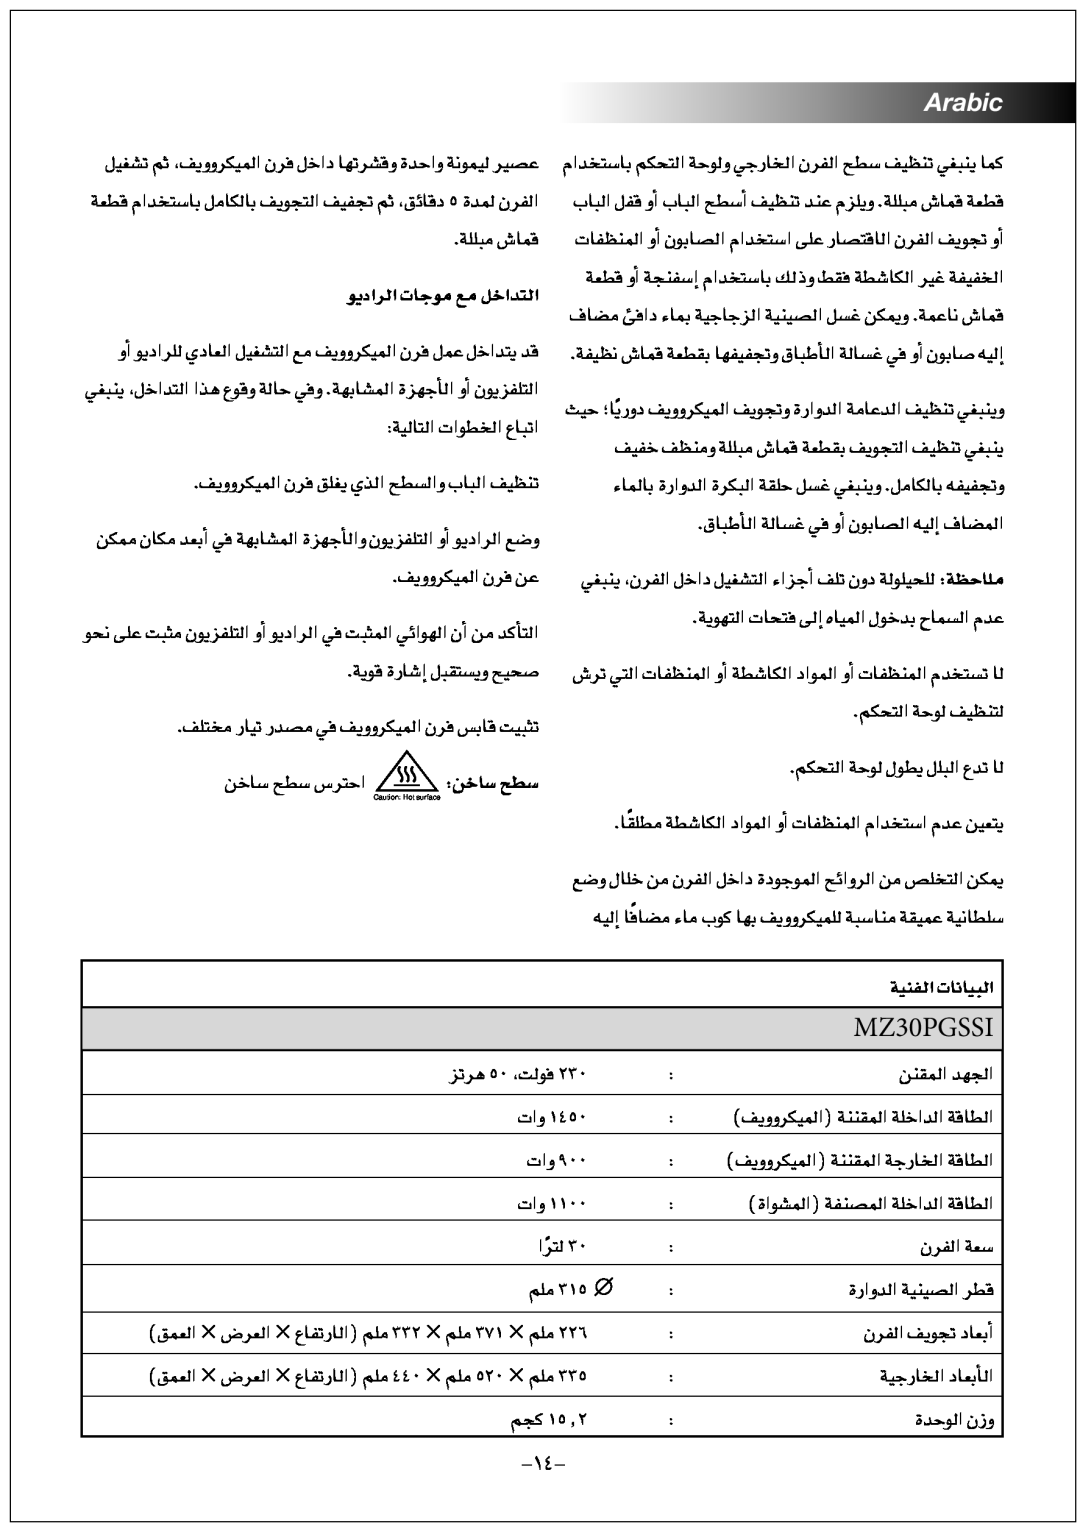 Black & Decker MZ30PGSSI manual ¿ôØdG ∞jƒéJ OÉHCG, Arabic 